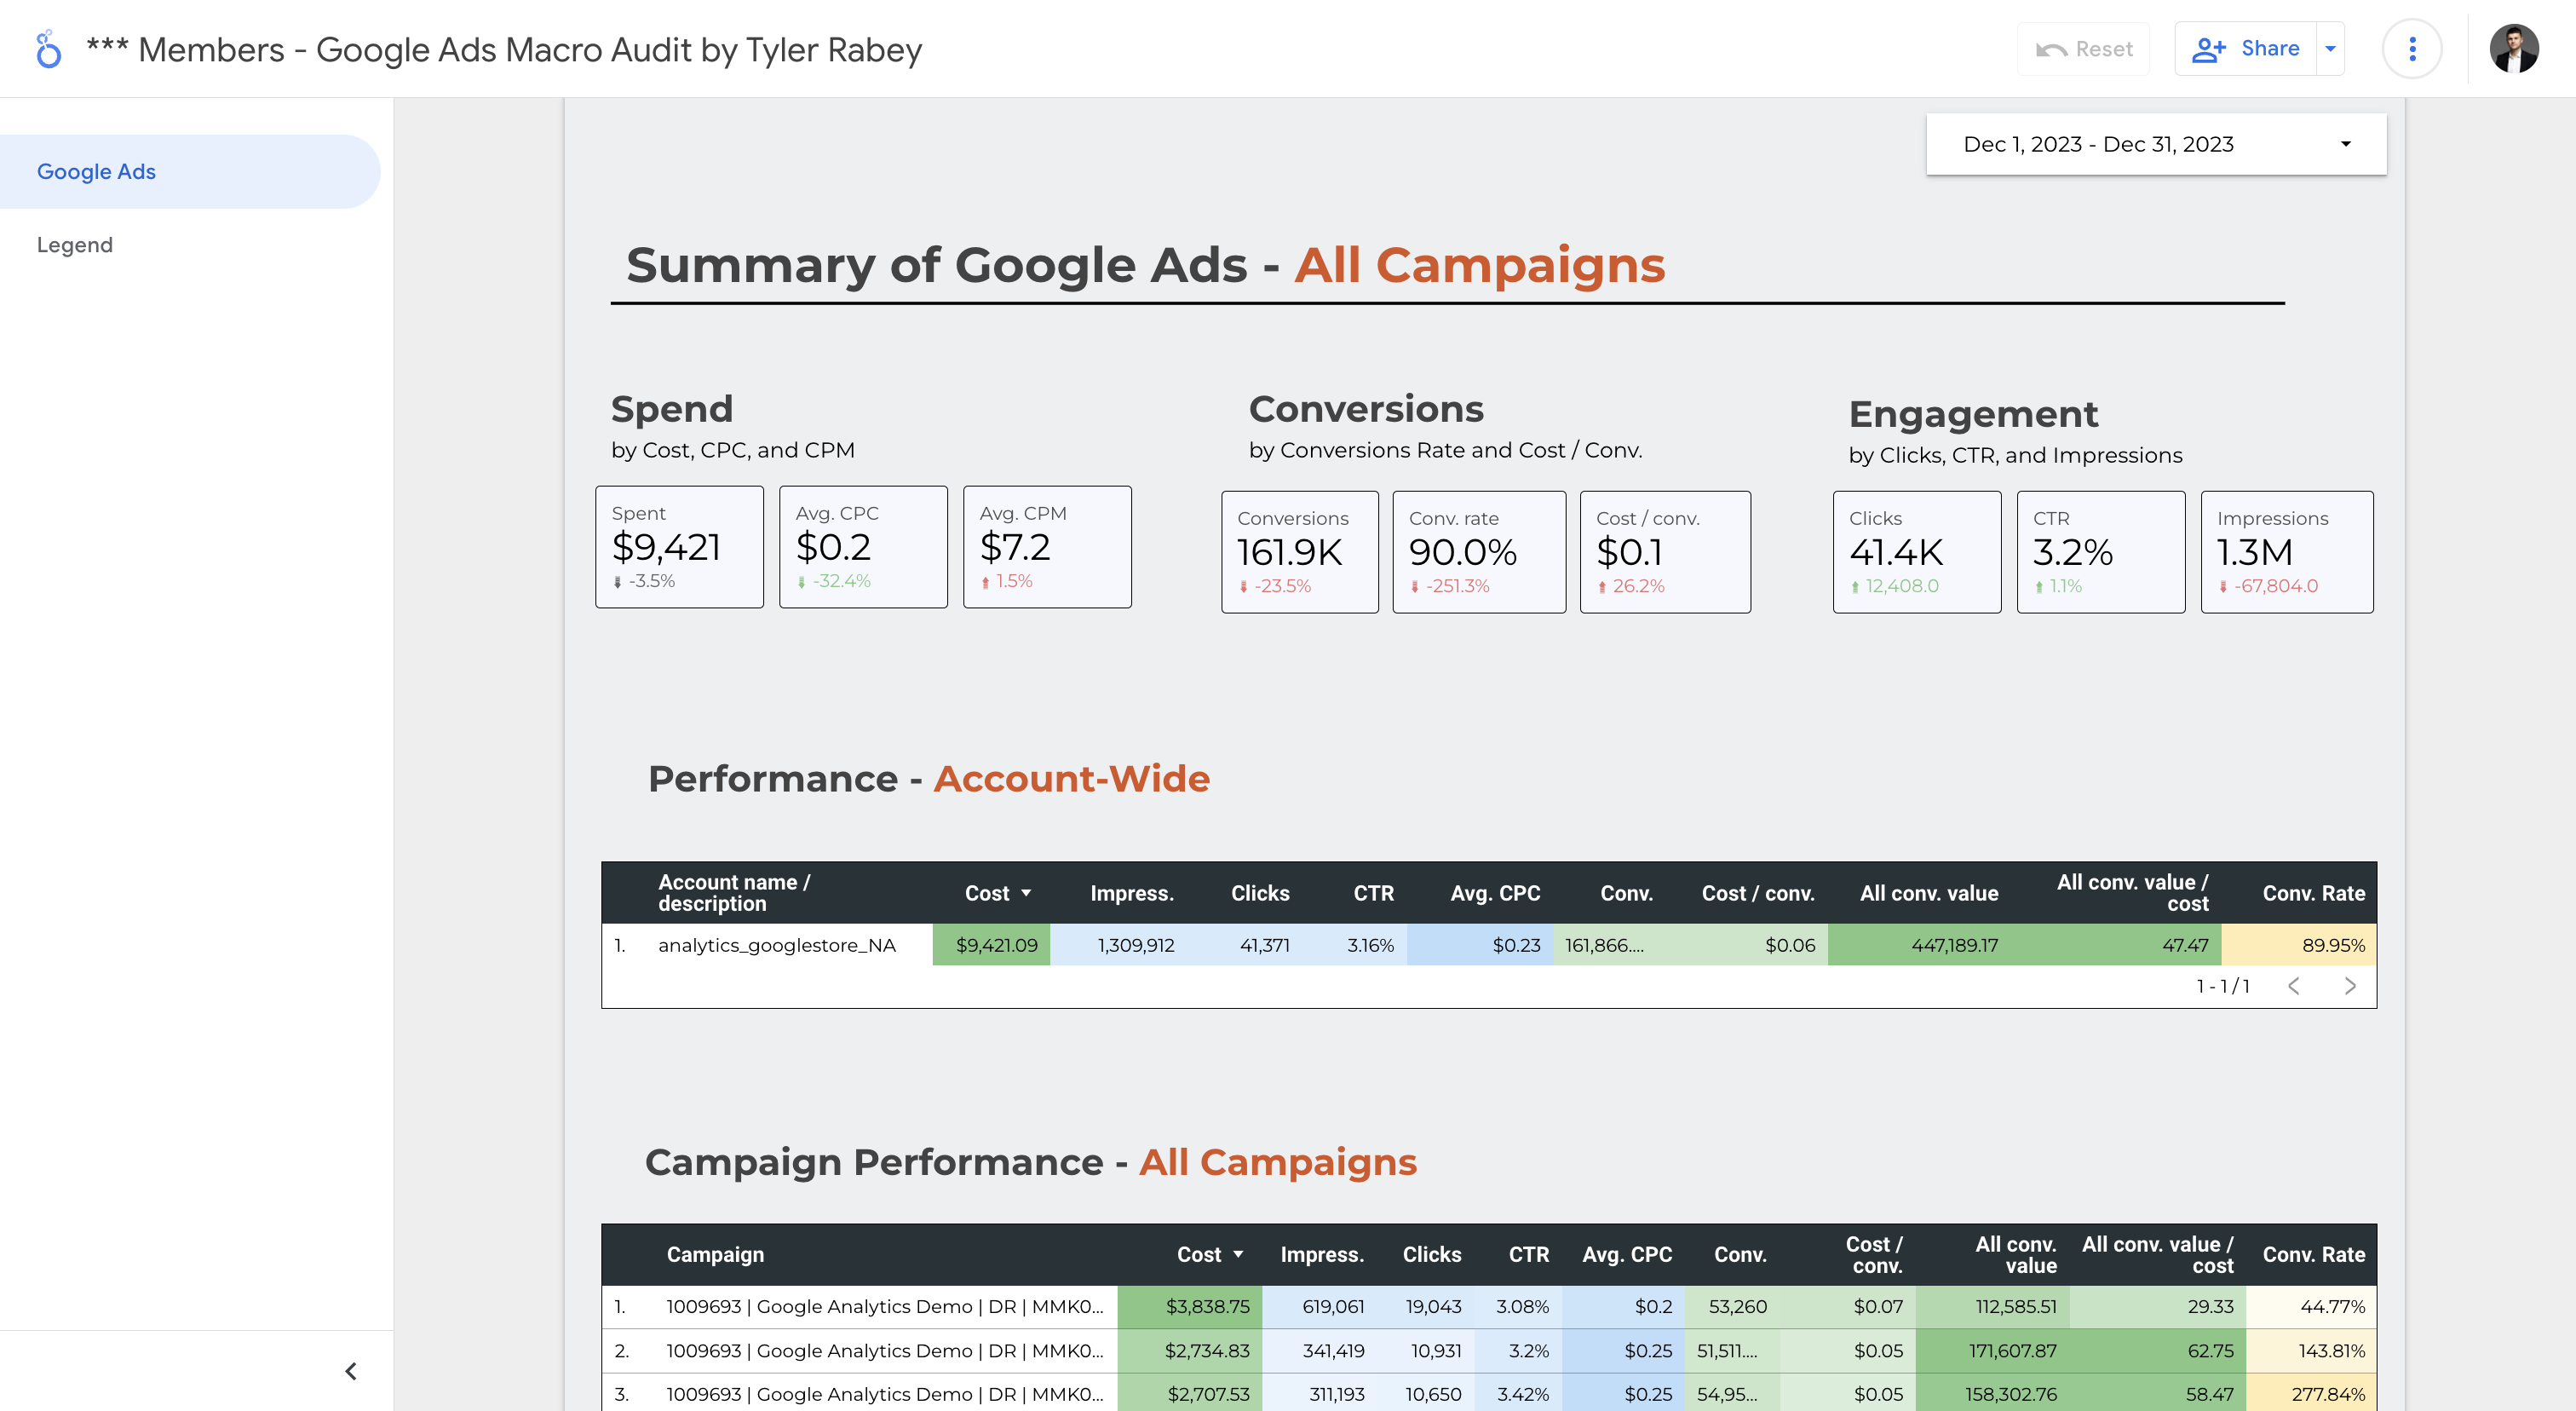 google ads macro audit by tyler rabey